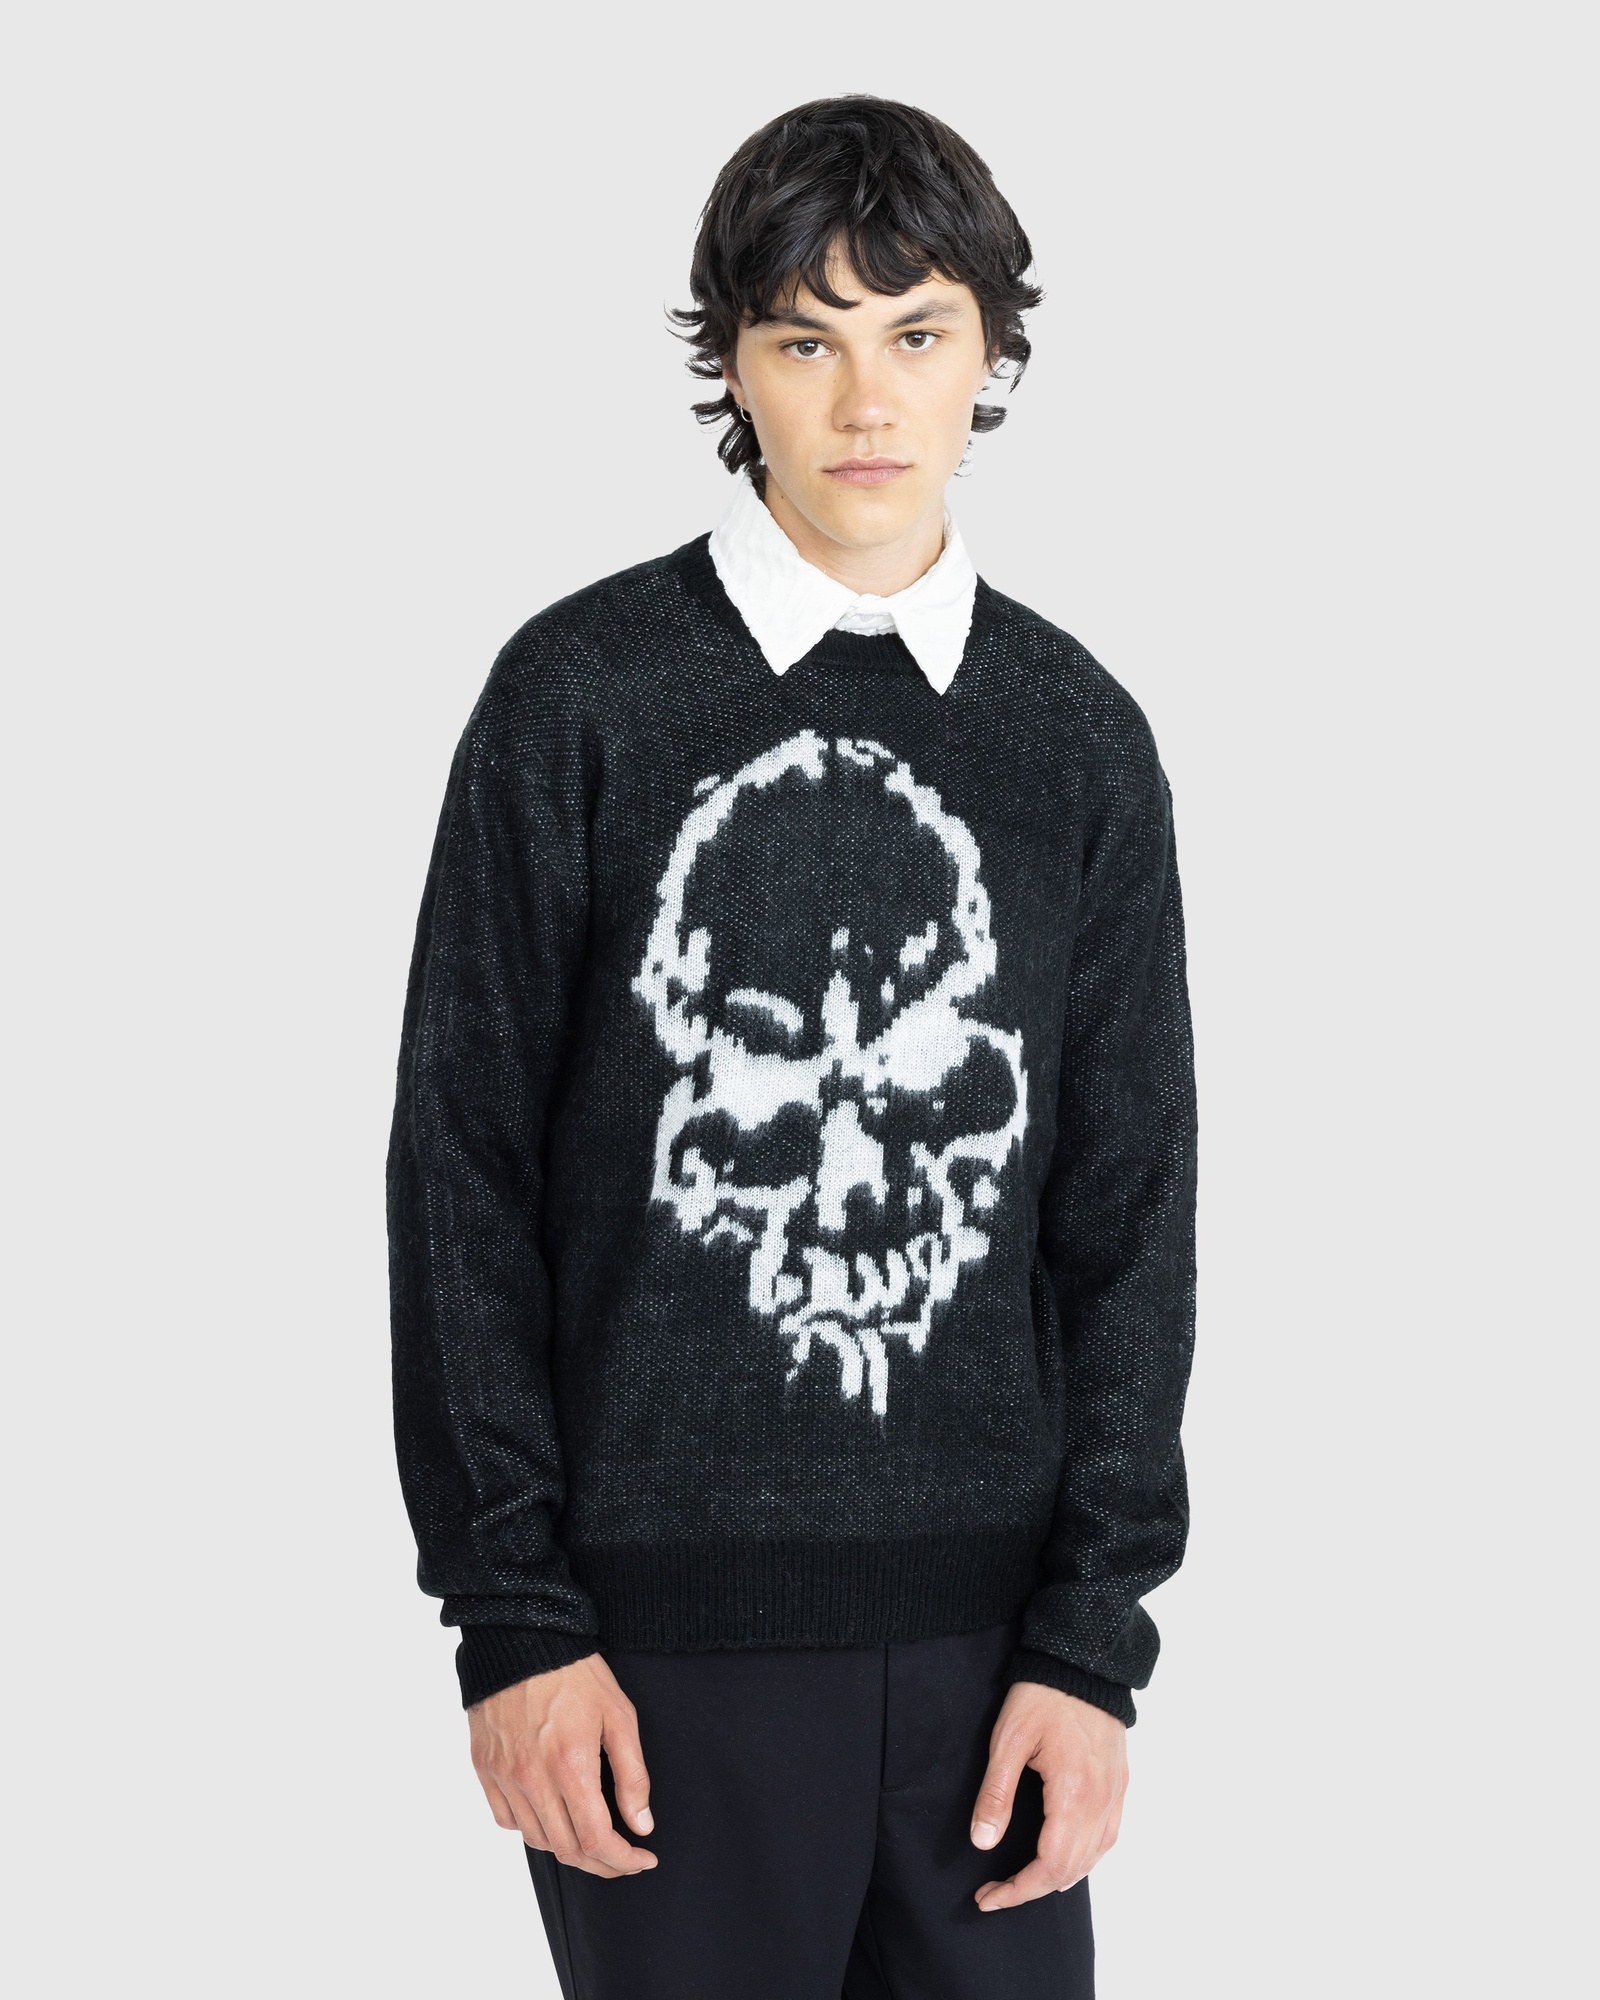 Noon Goons – Gatekeeper Sweater Black | Highsnobiety Shop